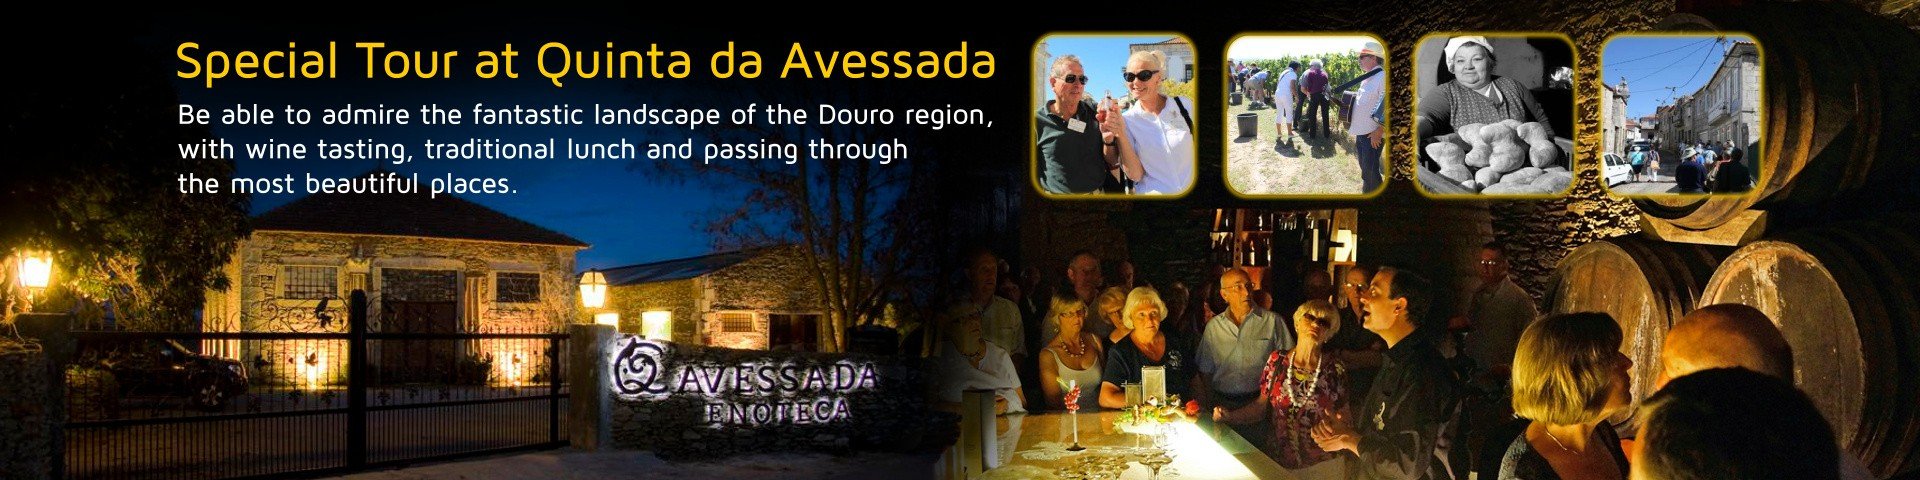 Avessada Tour in Douro